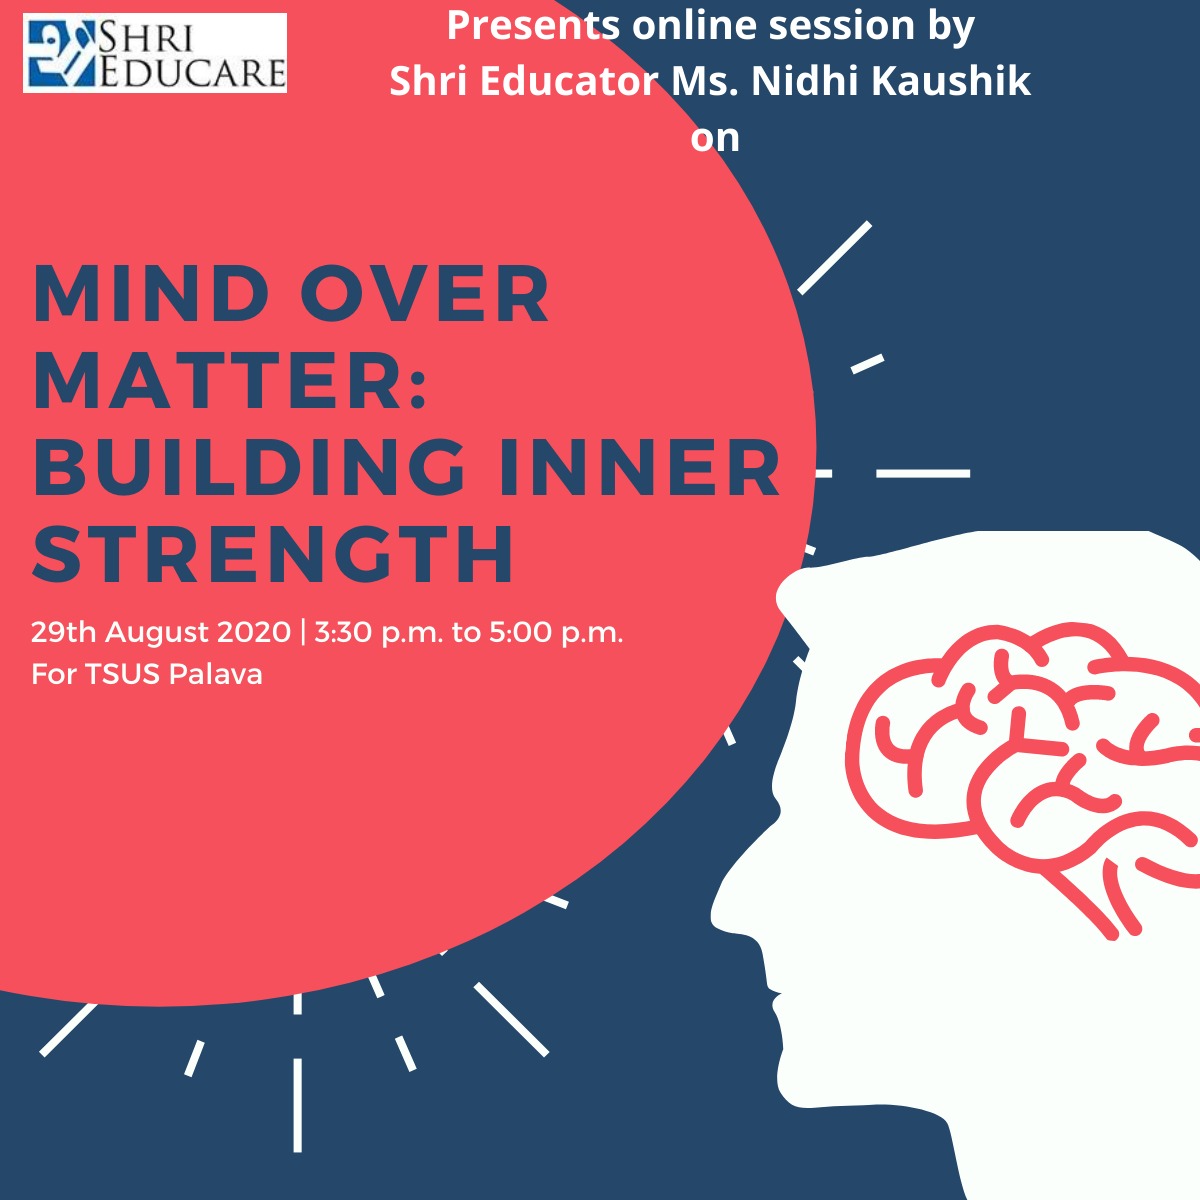 Online session mind over matter: building inner strength